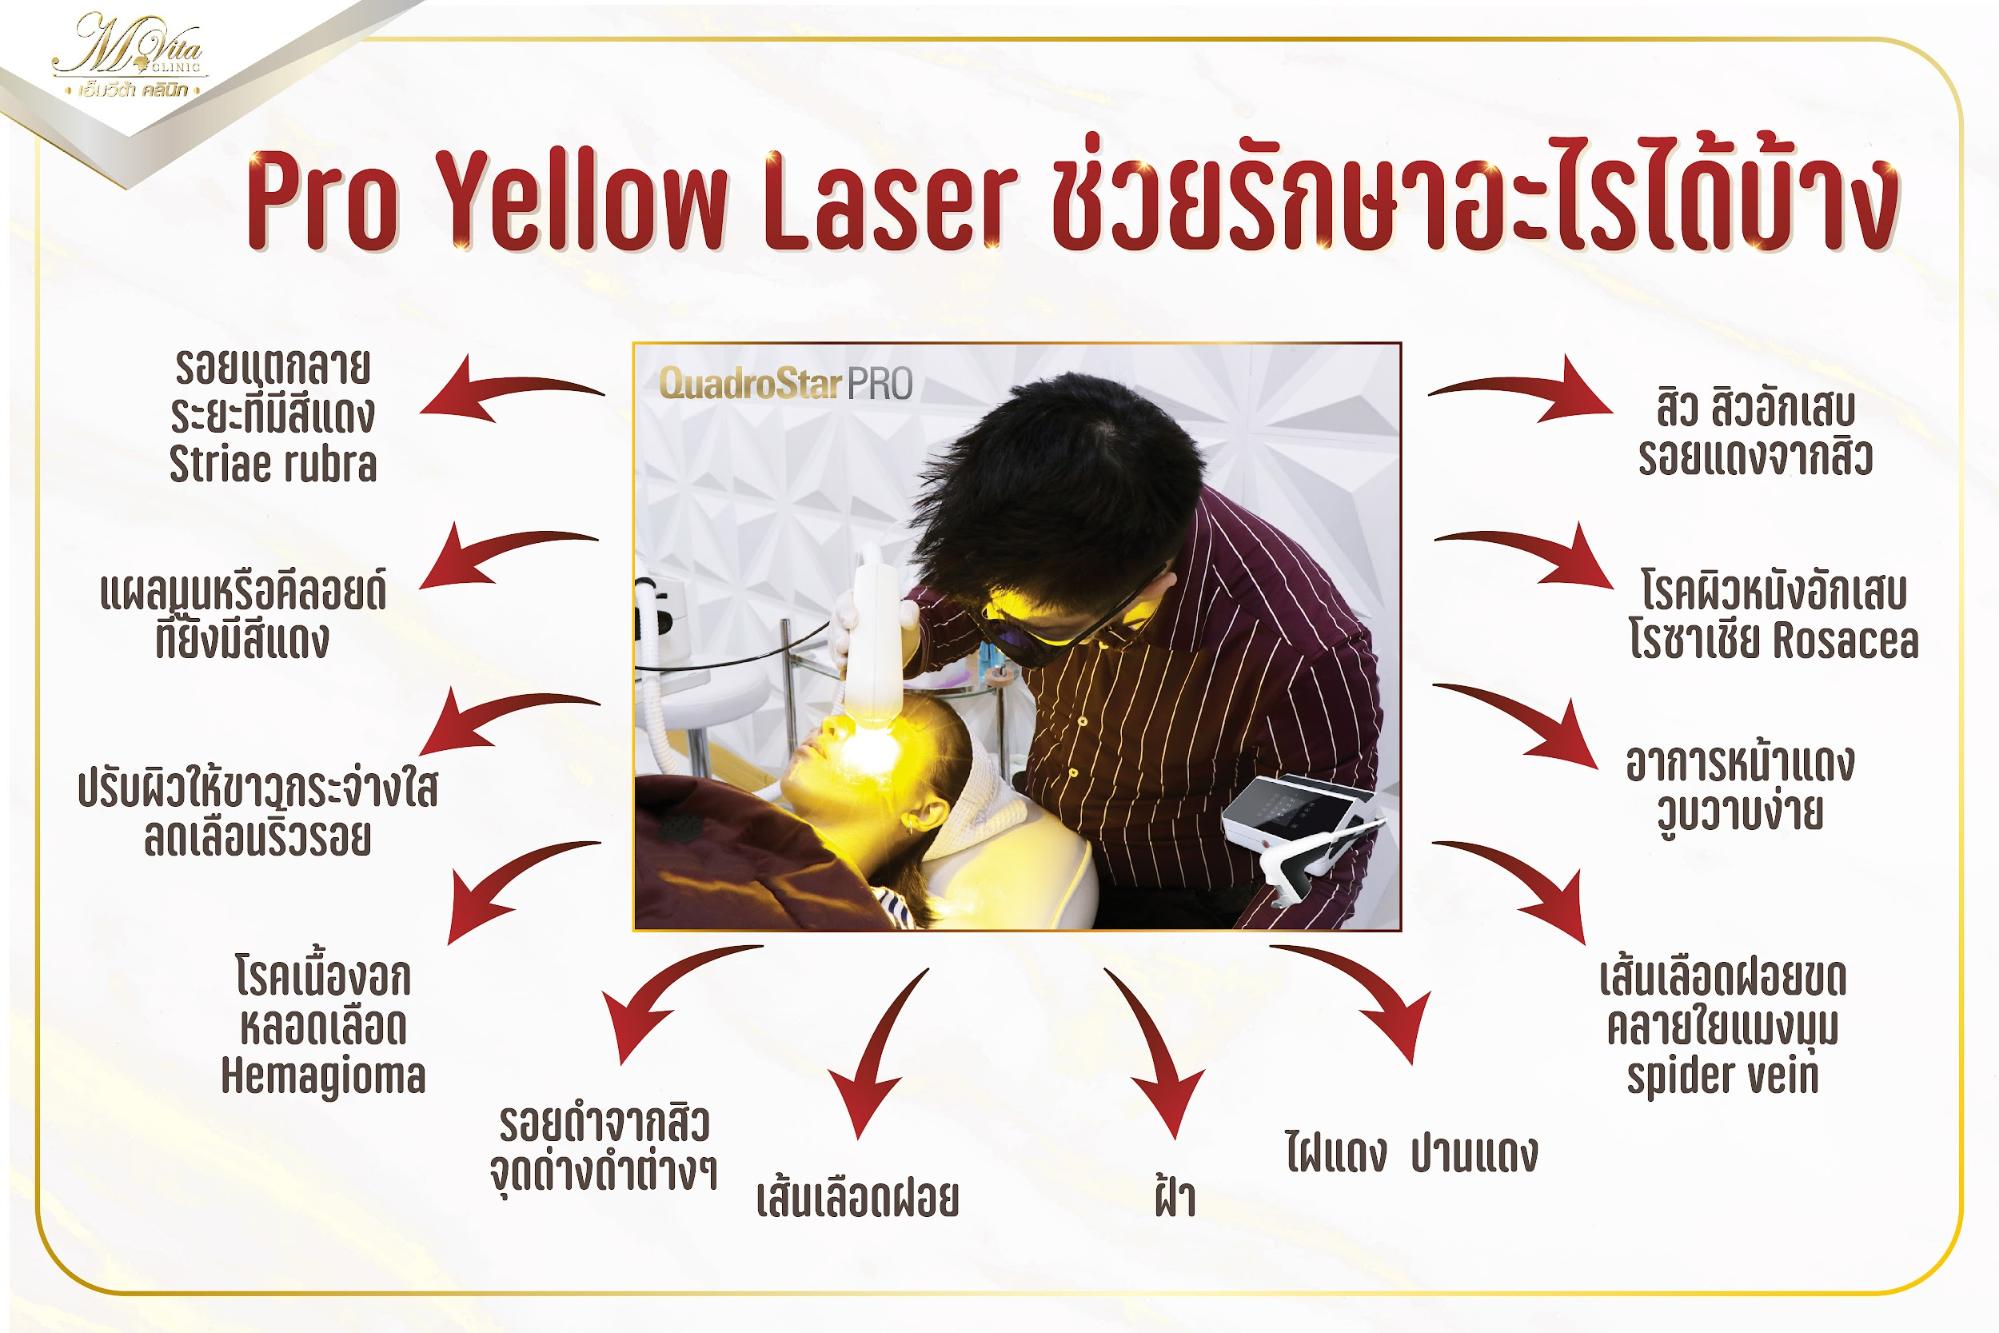 Pro Yellow Laser รักษา